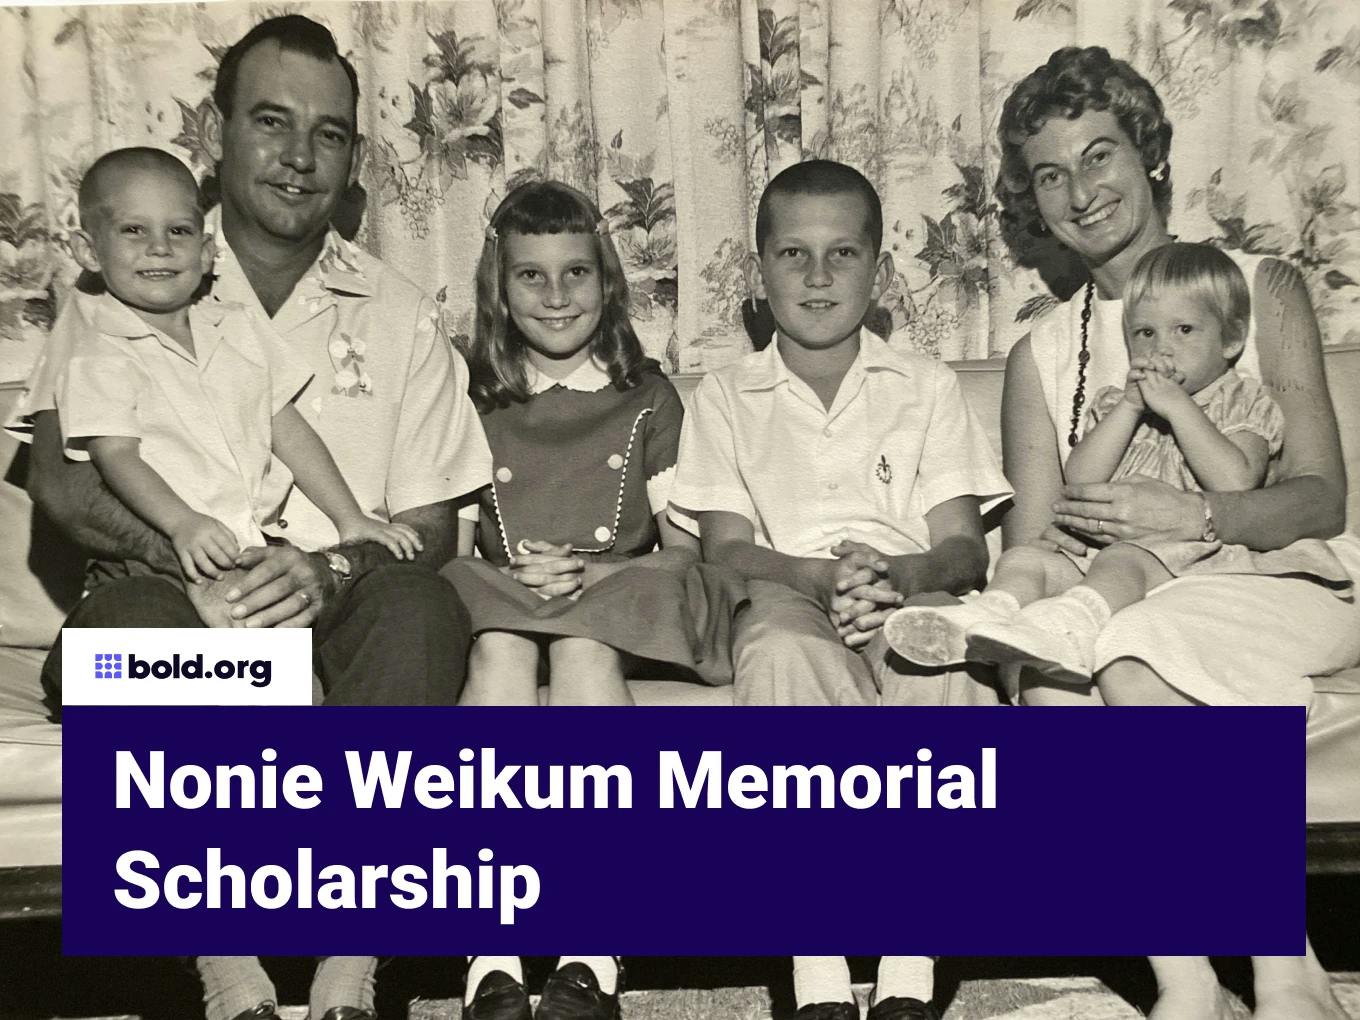 Nonie Weikum Memorial Scholarship